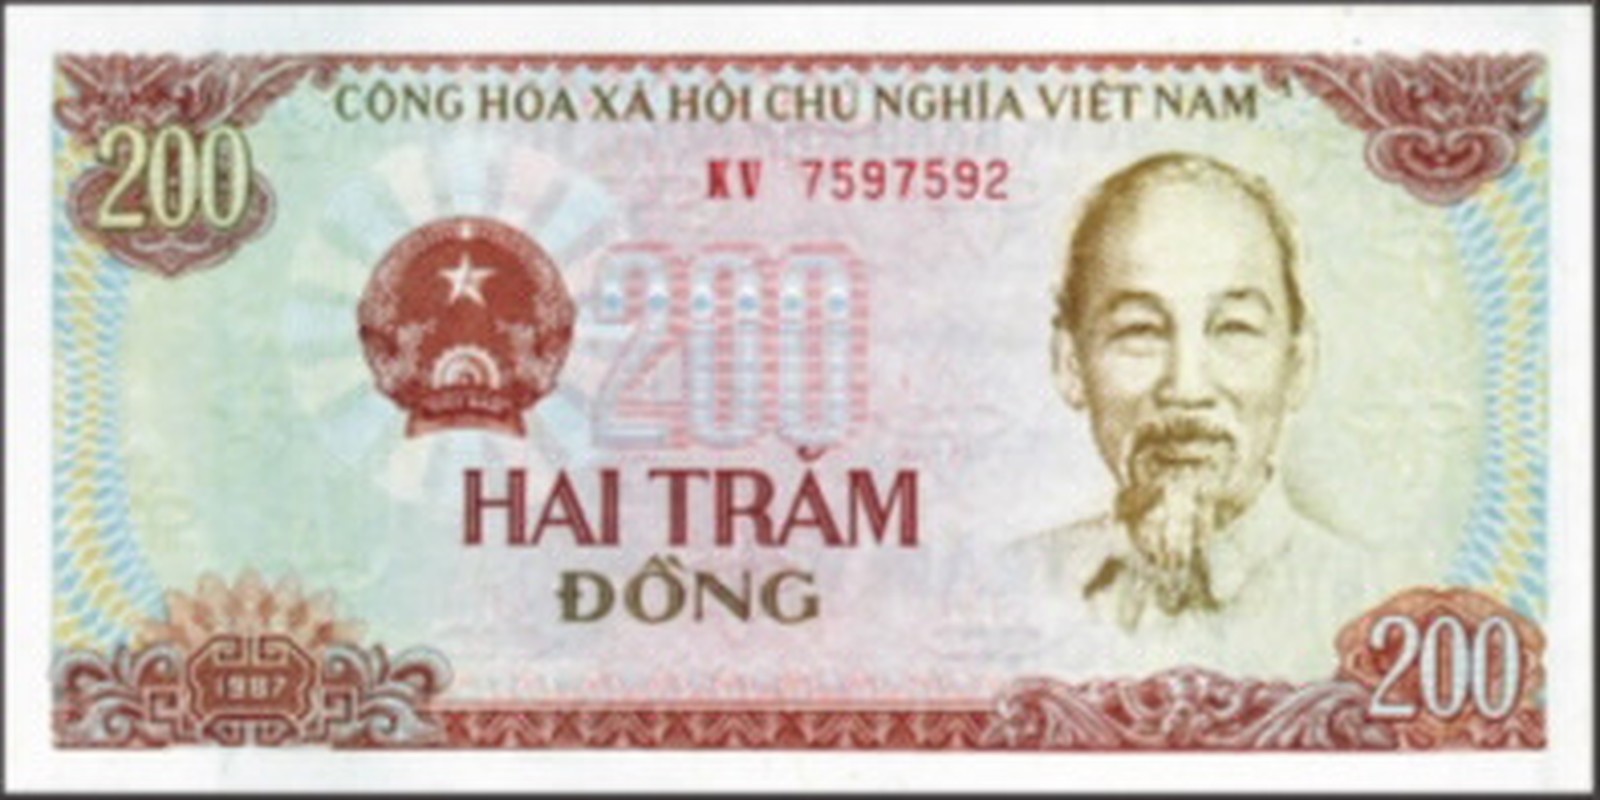 3 to tien giay cua Viet Nam dang luu hanh nhung hiem gap-Hinh-6